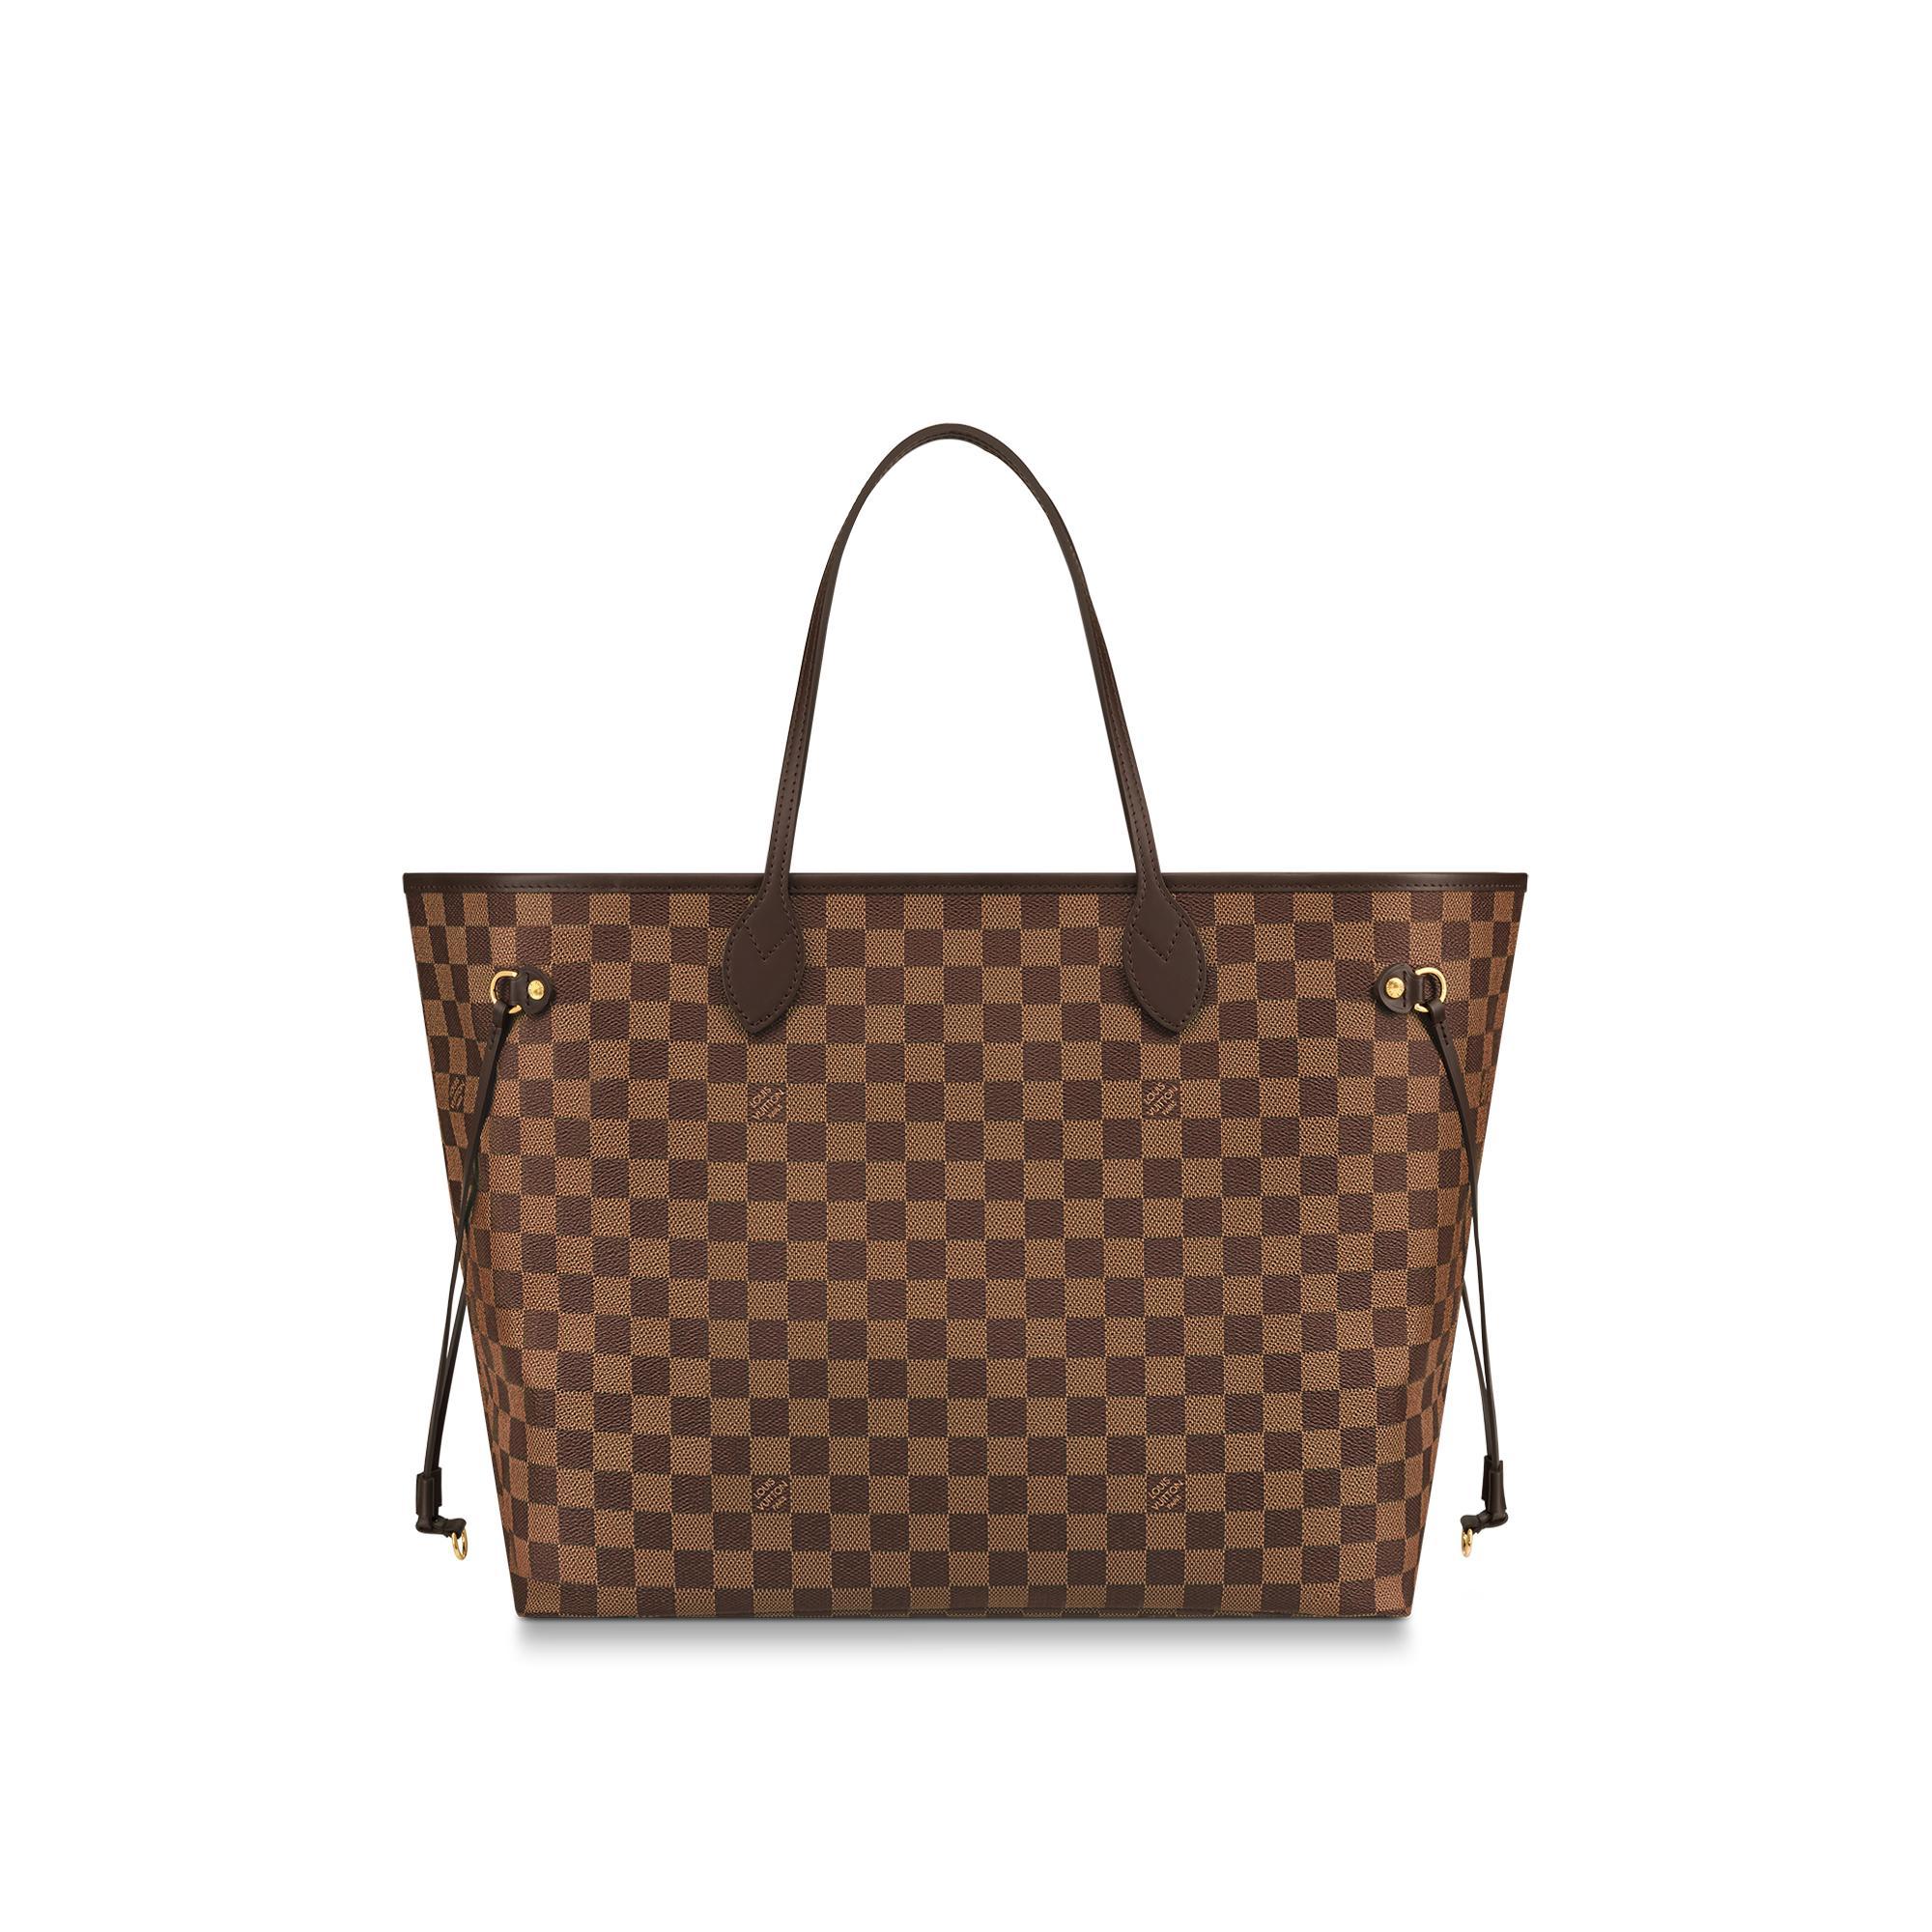 Louis Vuitton lansirao dosad najbizarniju torbicu